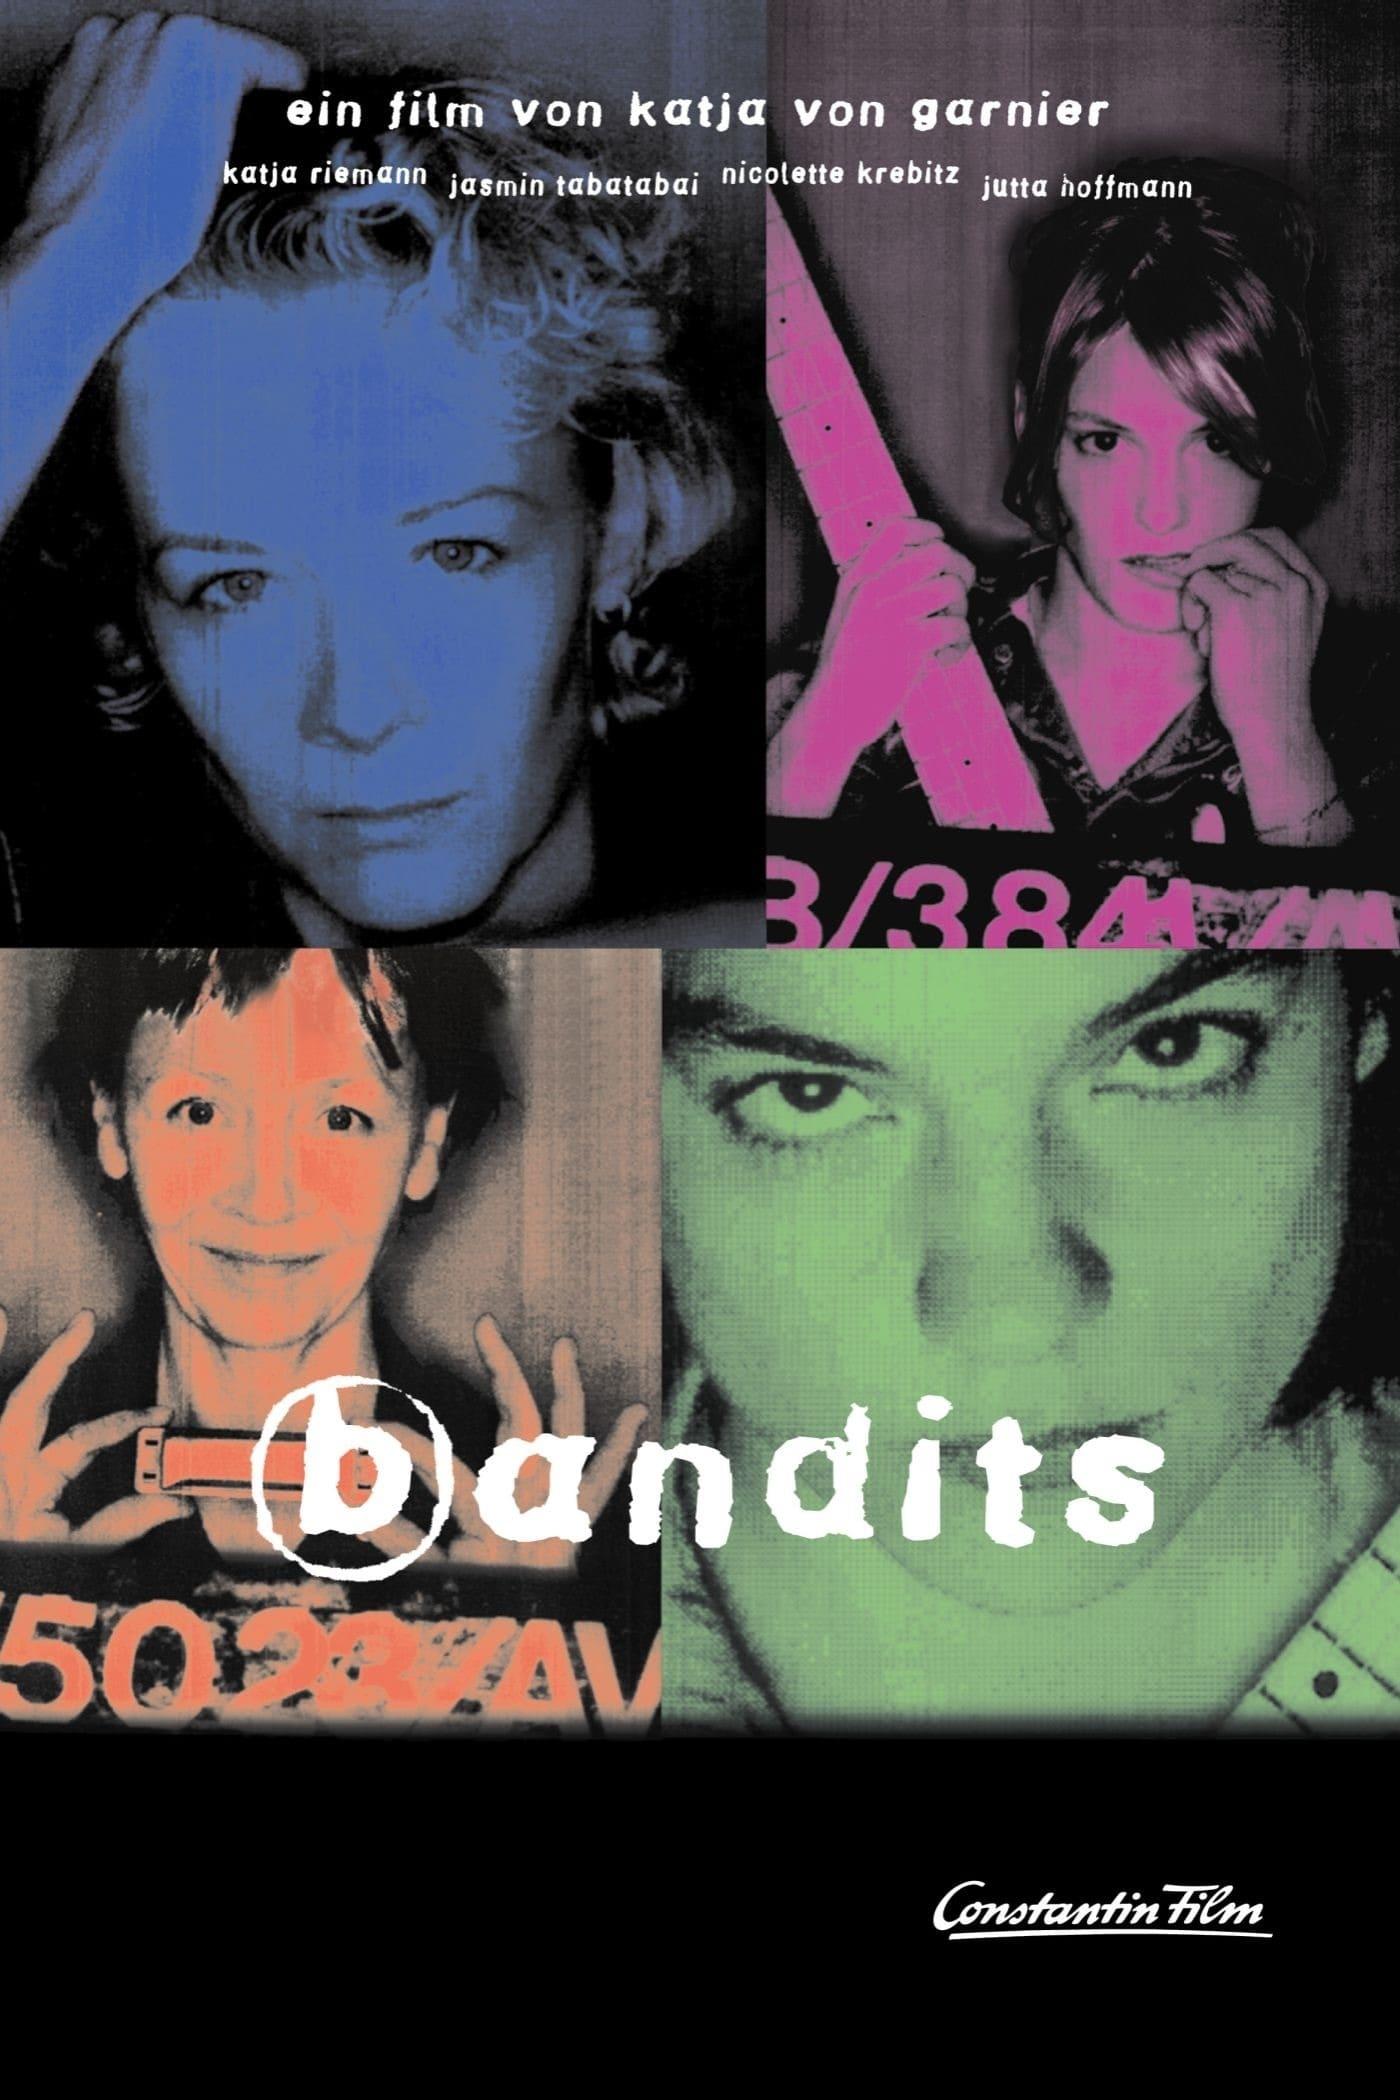 Bandits poster